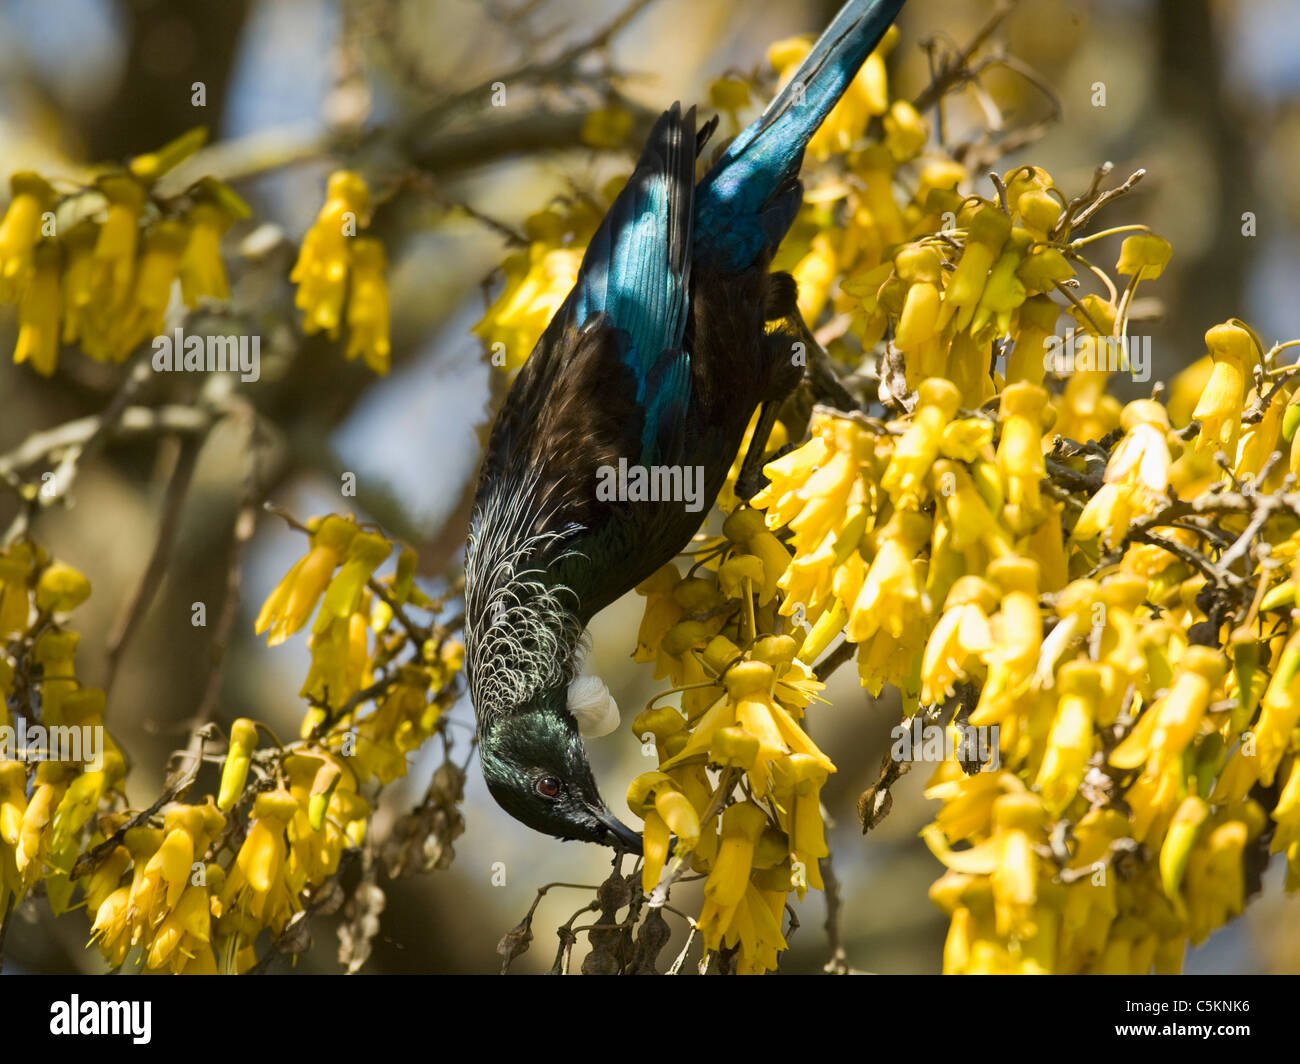 Male Tui bird feeding on nectar in a Kowhai tree, New Zealand Stock Photo